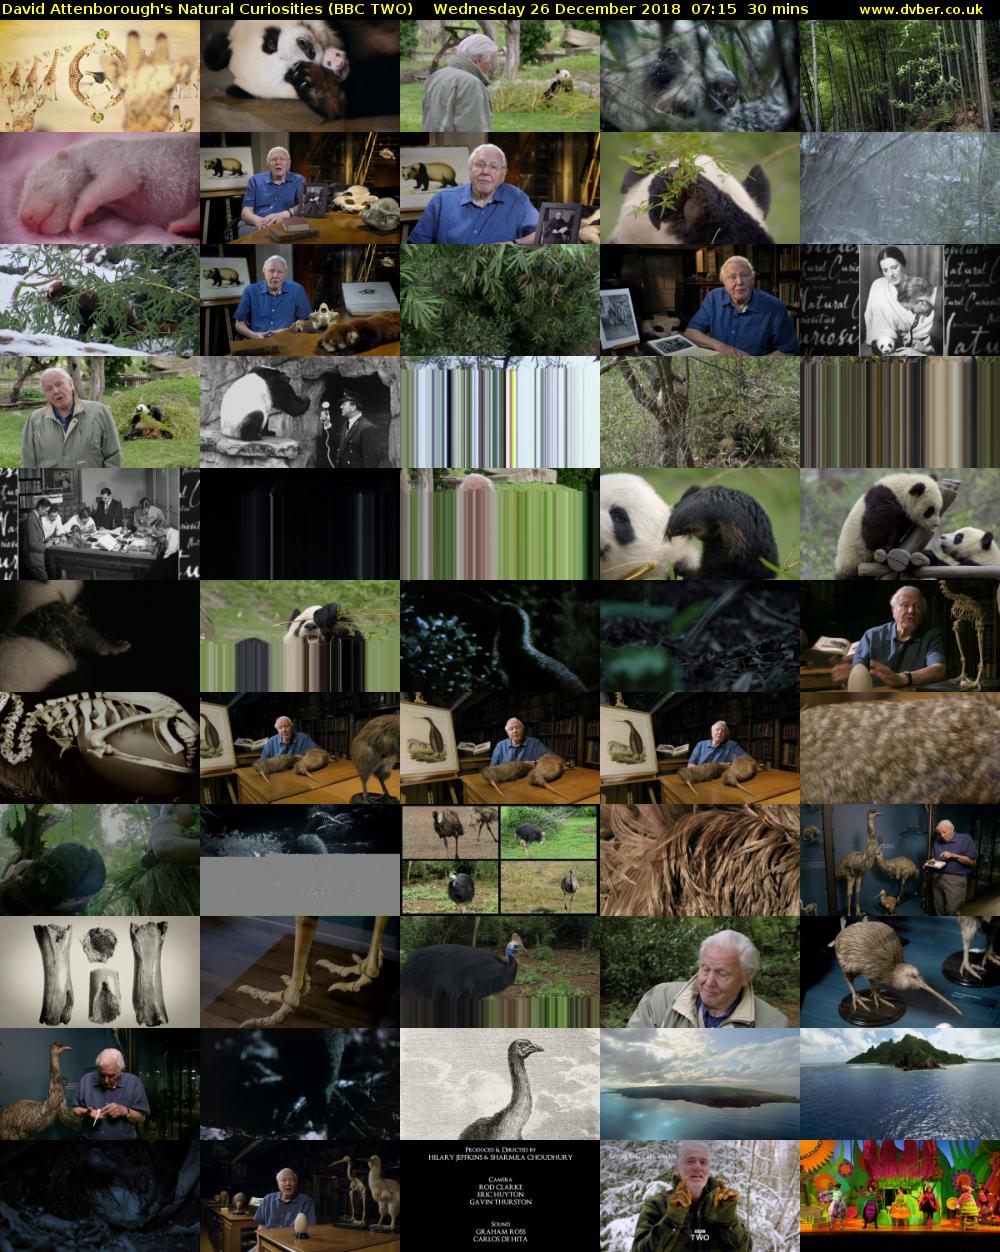 David Attenborough's Natural Curiosities (BBC TWO) Wednesday 26 December 2018 07:15 - 07:45